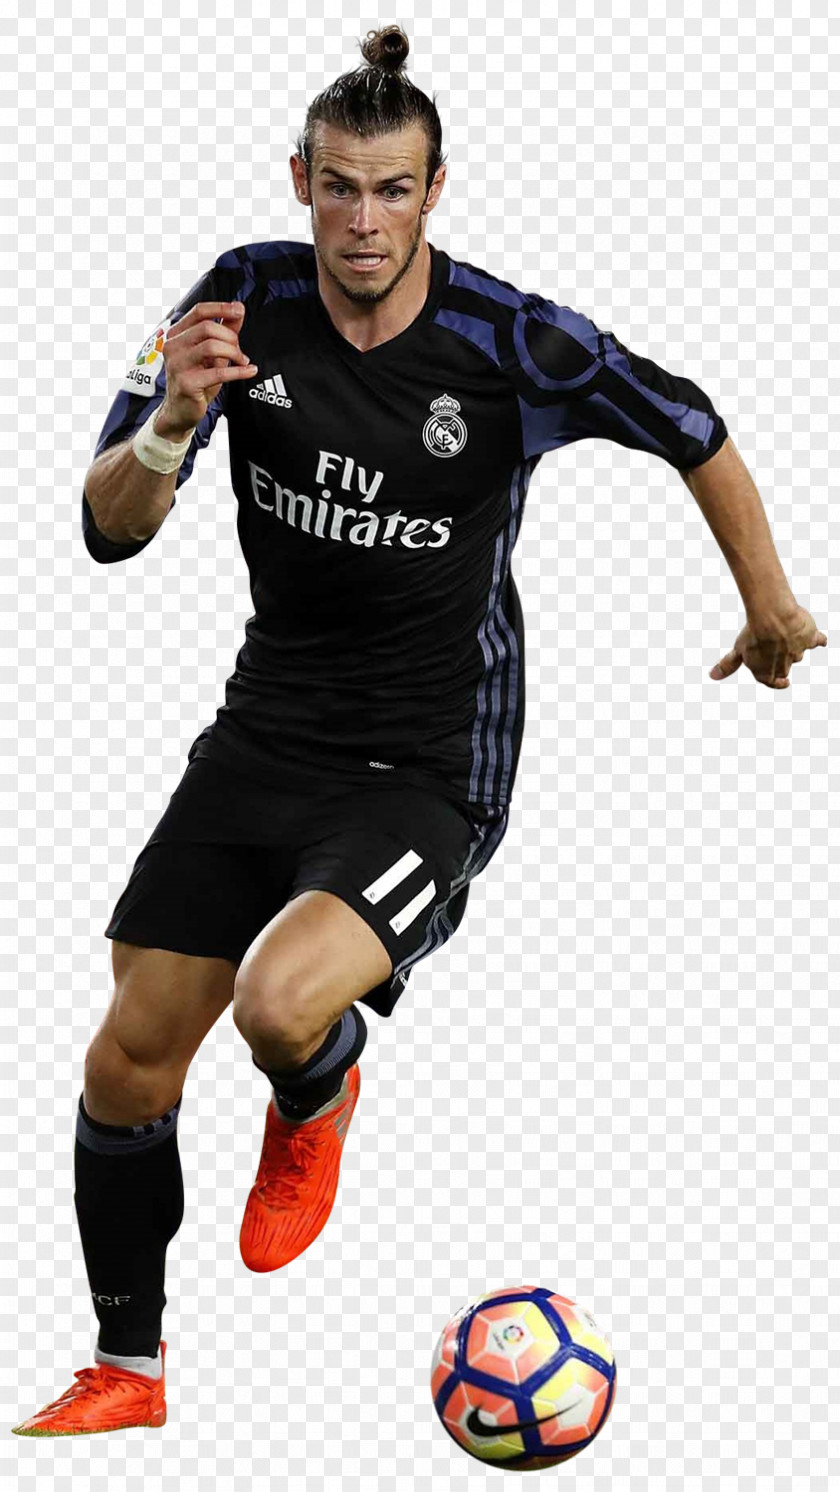 Football Gareth Bale Soccer Player DeviantArt PNG